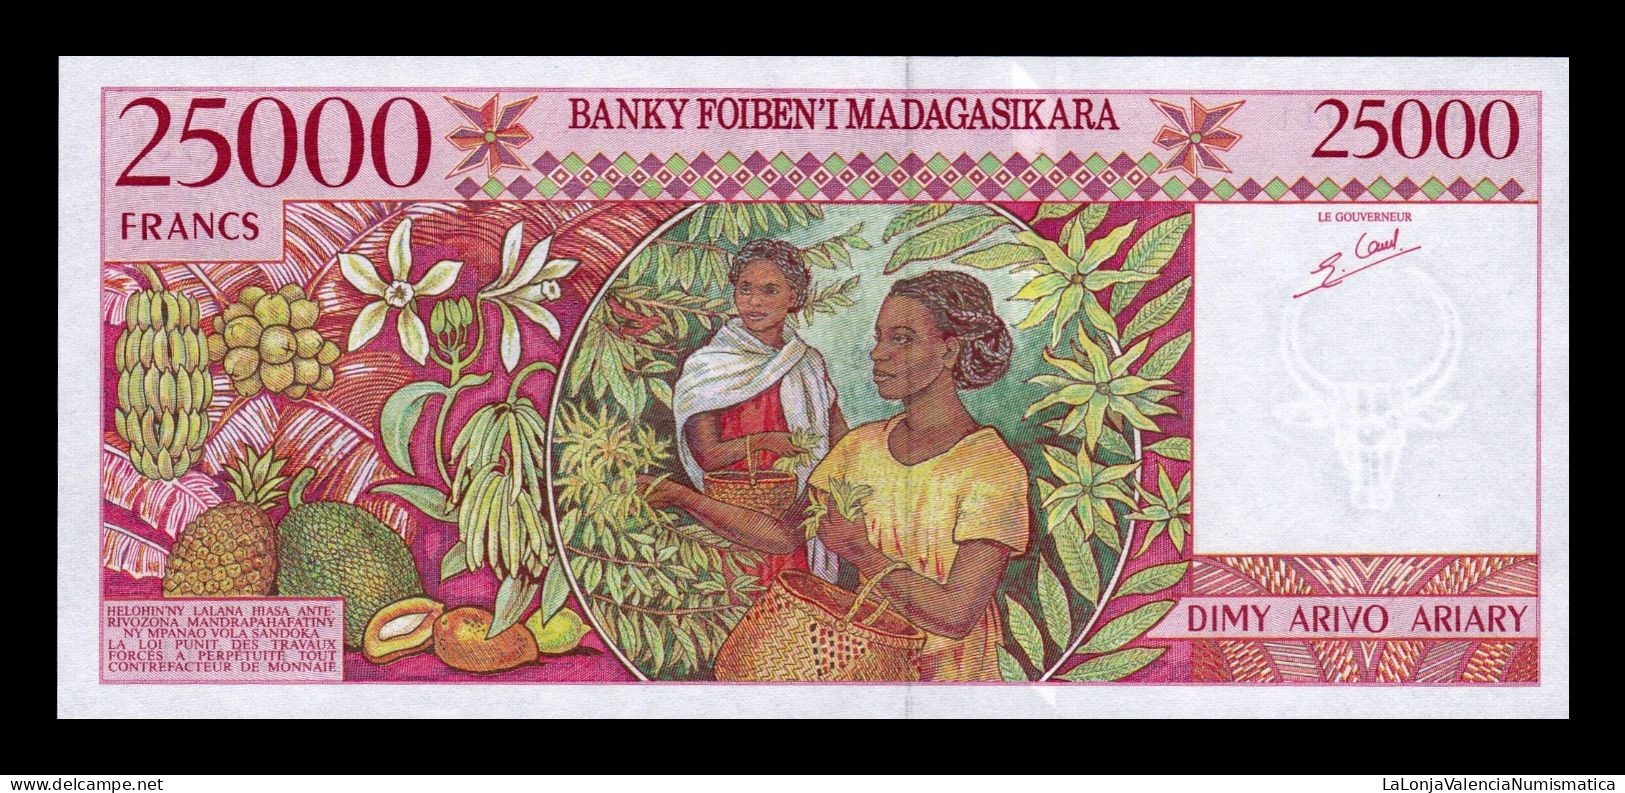 Madagascar 25000 Francs ND (1998) Pick 82 Sc Unc - Madagascar